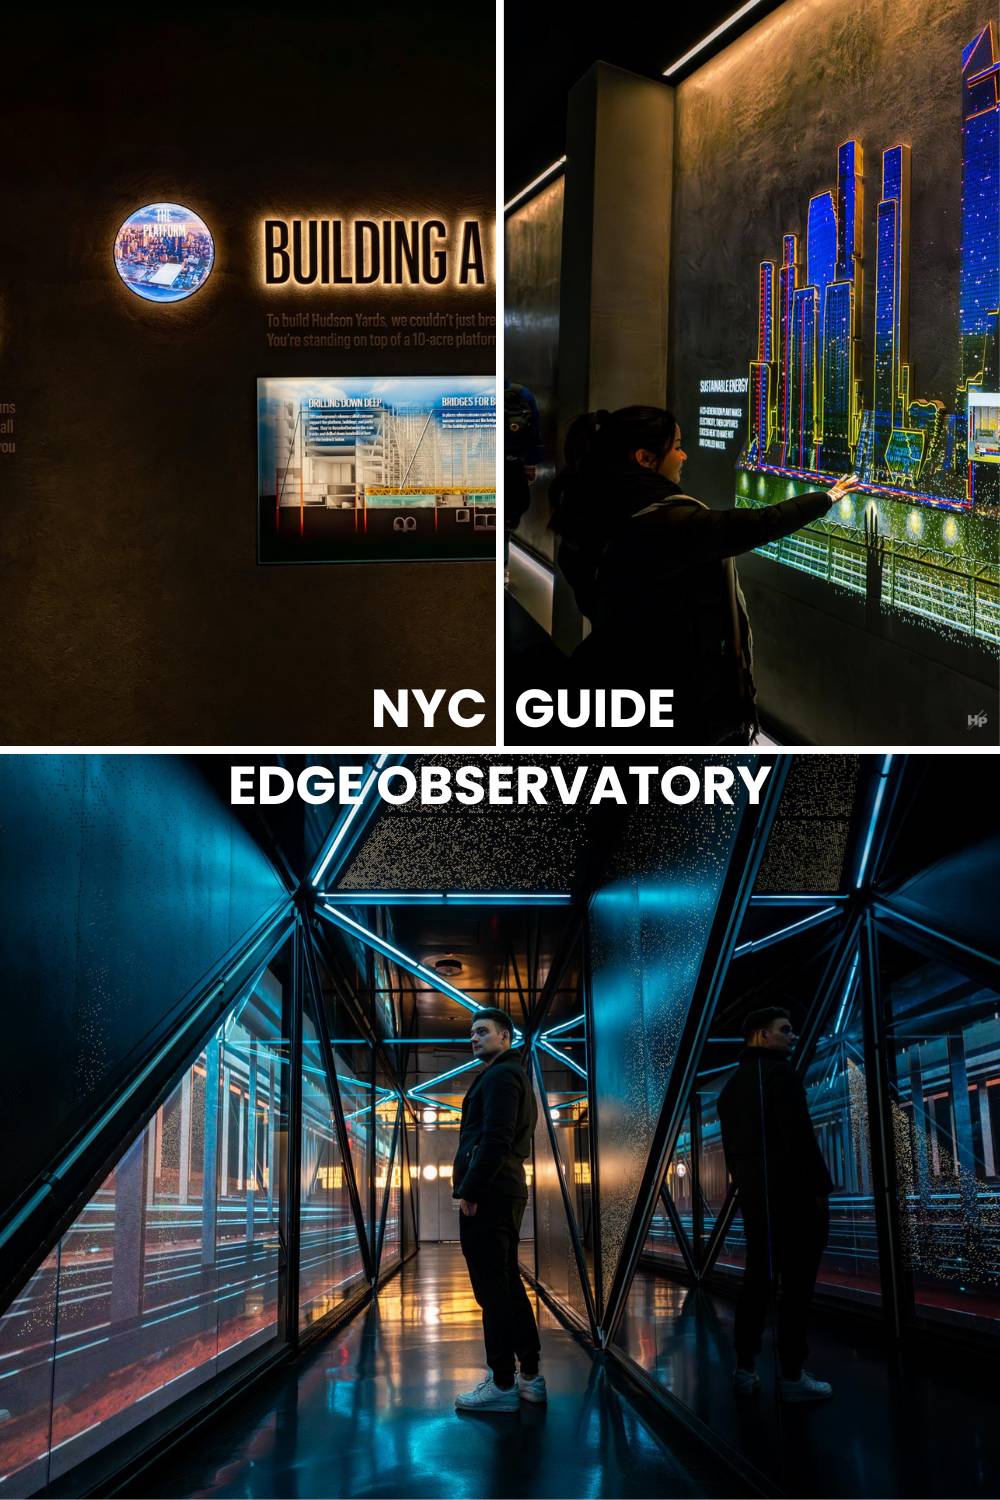 Edge Observation Deck NYC Exhibit